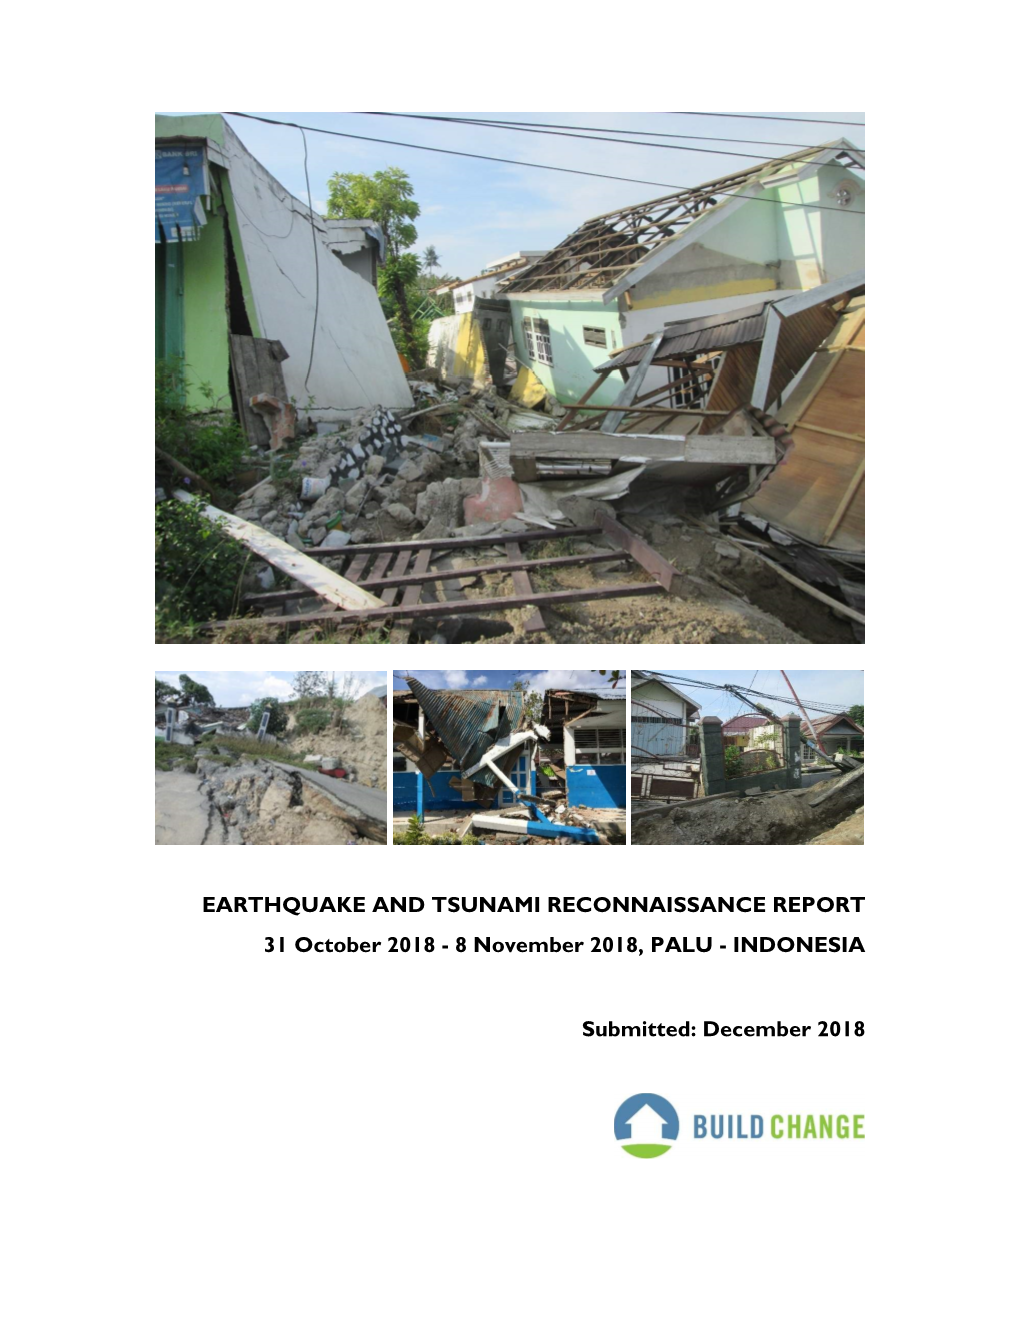 (Palu) Earthquake and Tsunami Reconnaissance Report